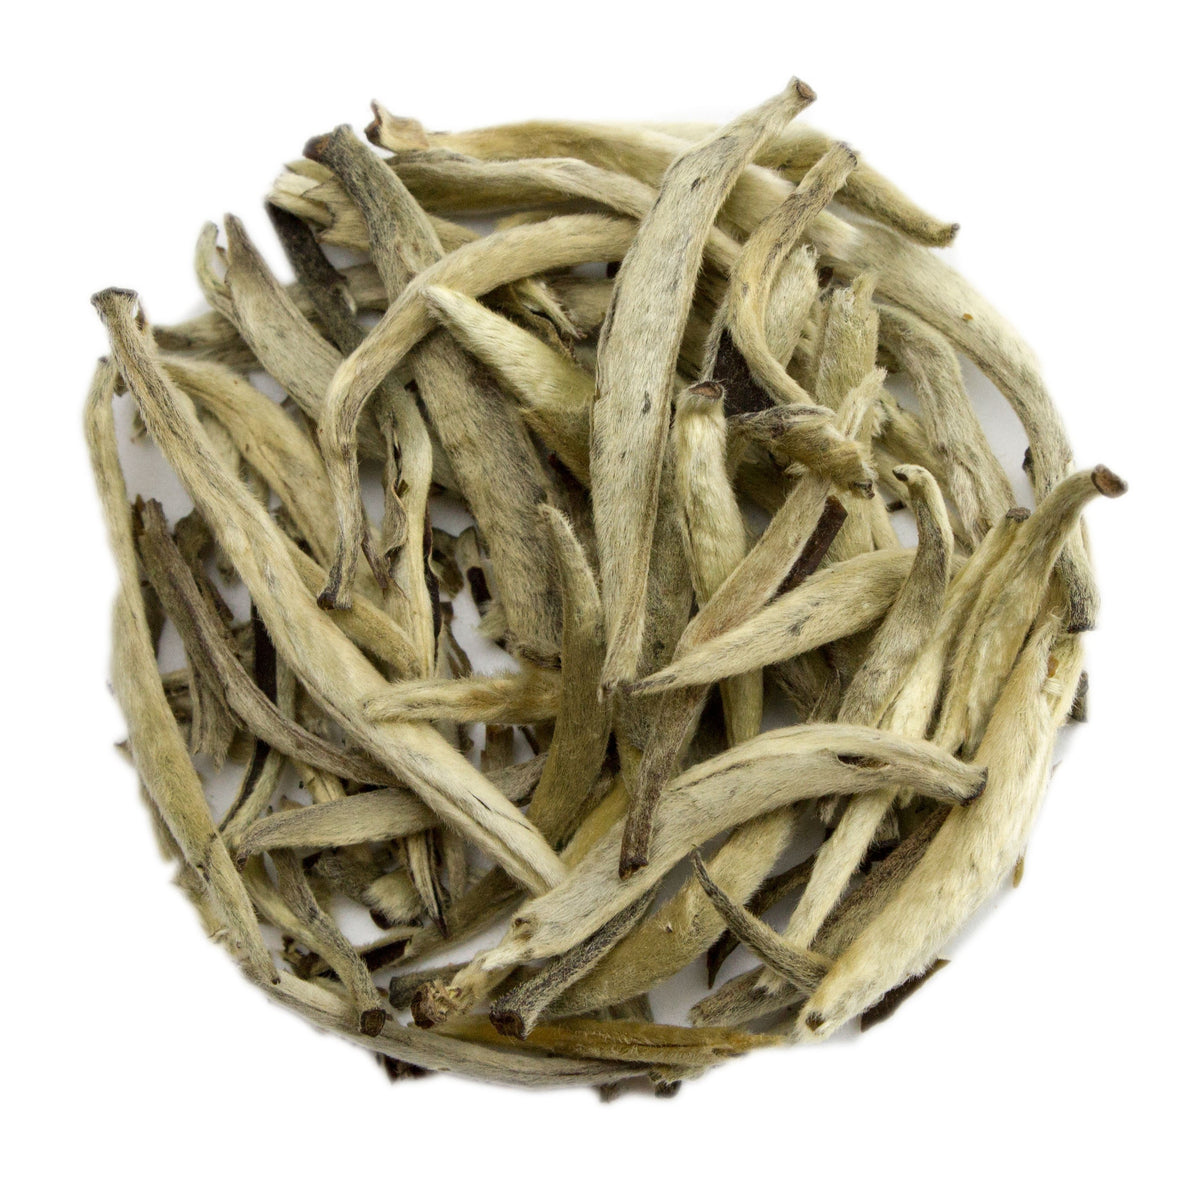 Yunnan Moonlight White Tea